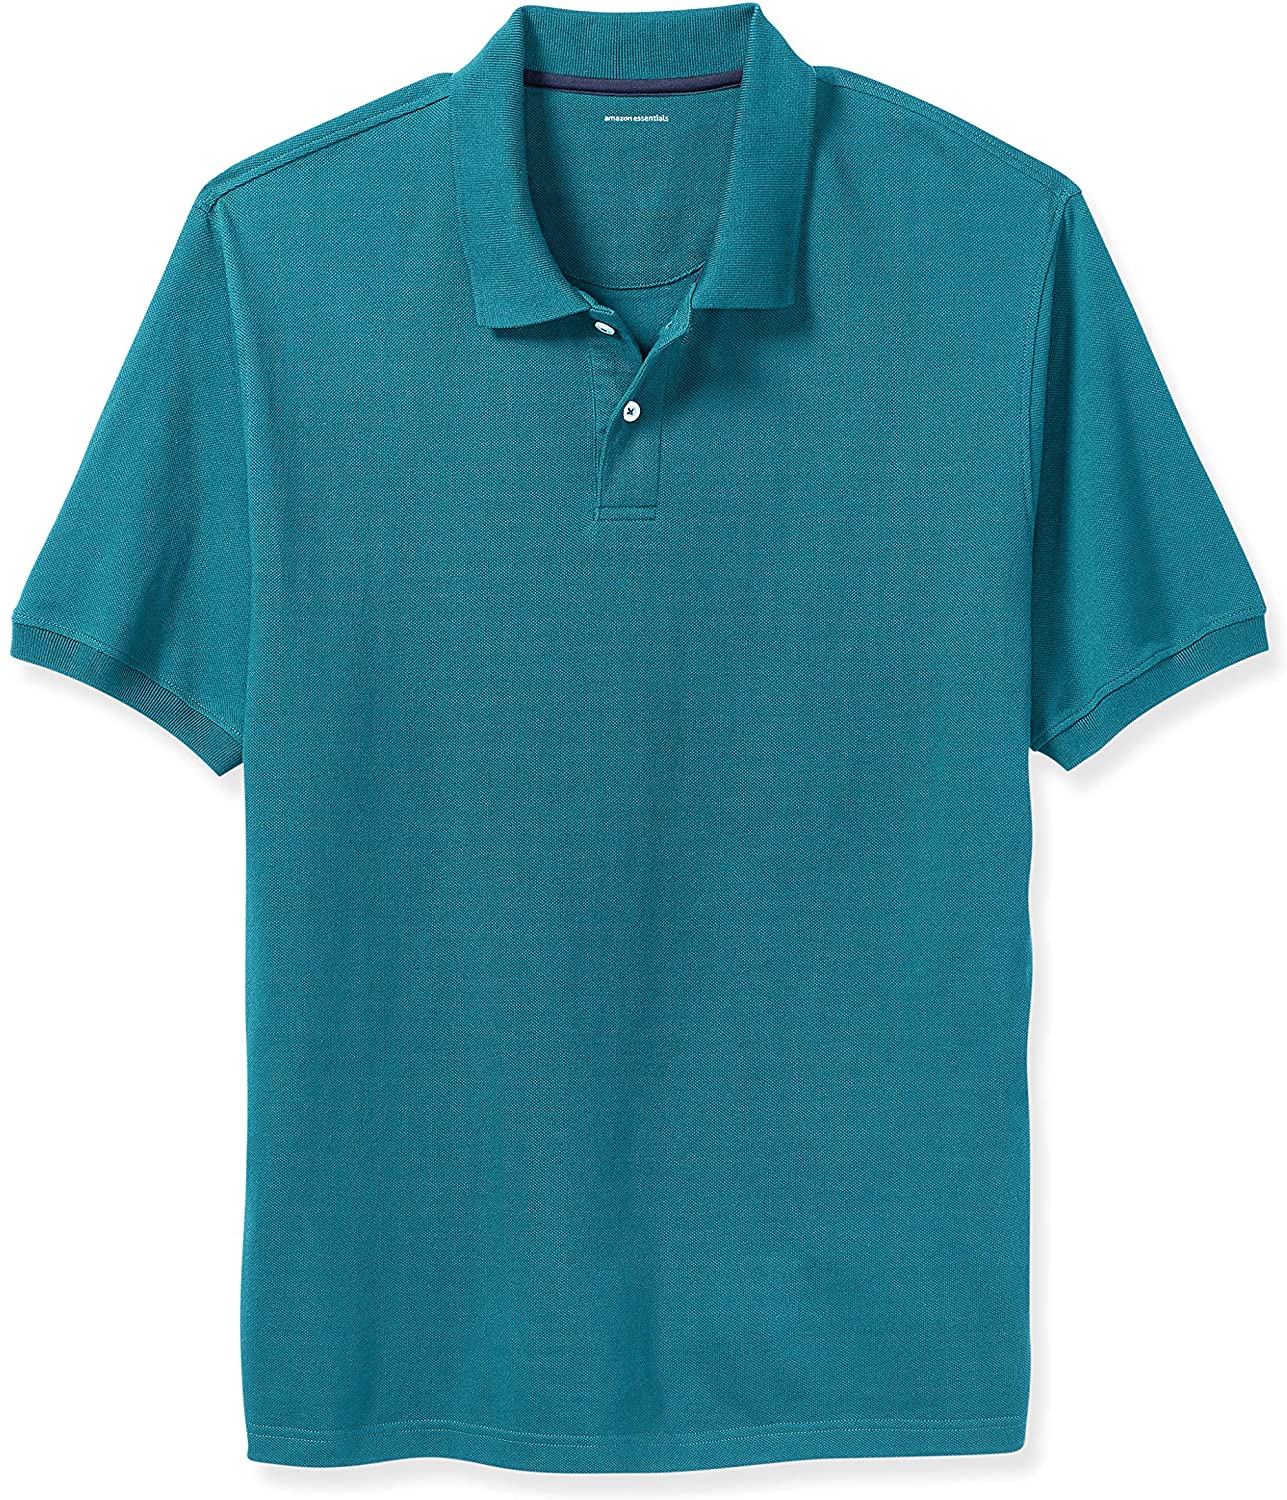 Essentials Men's Big & Tall Cotton Pique Polo Shirt, Dark Teal, Size 3. ...